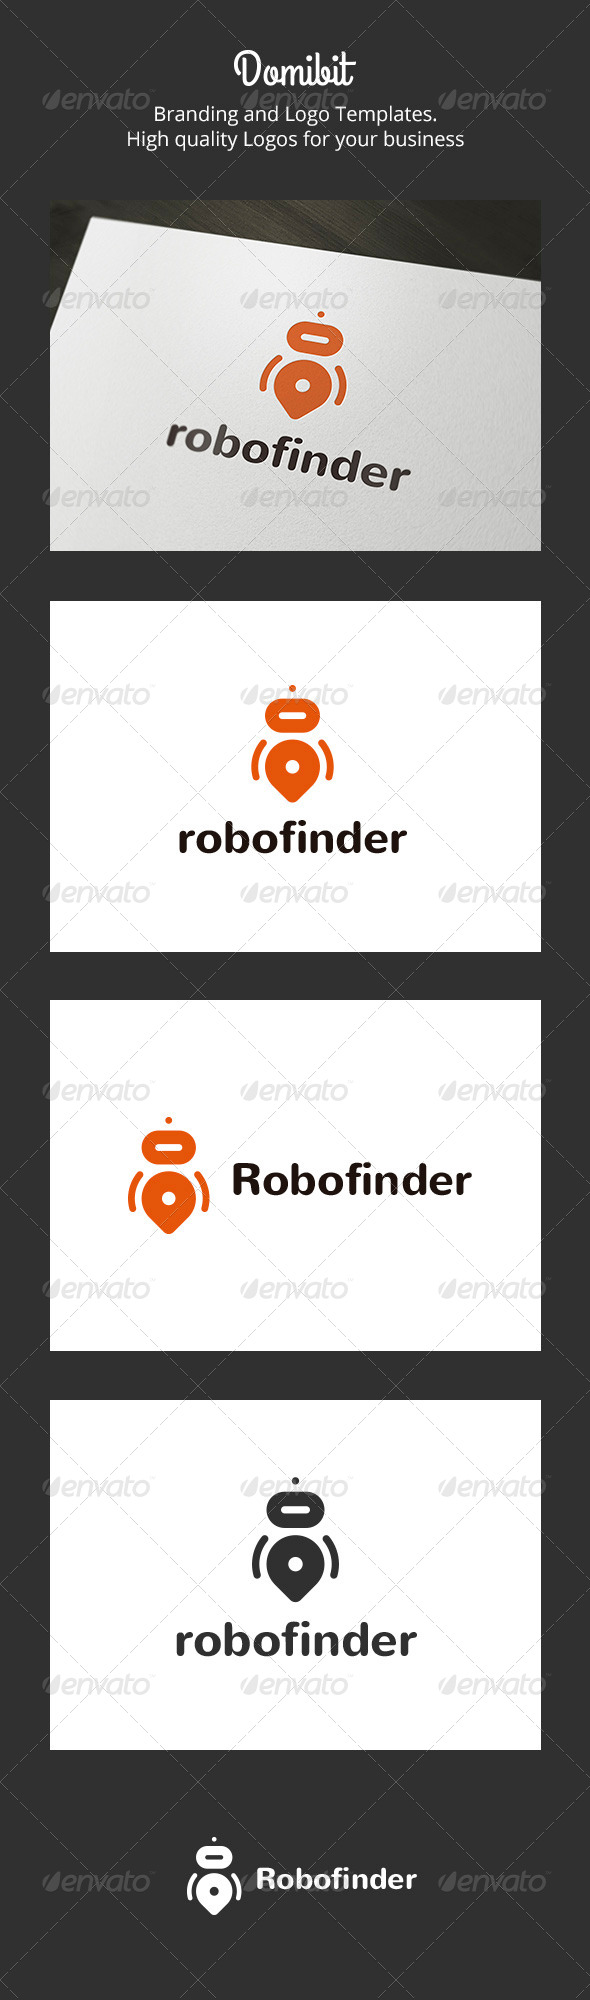 Robofinder - Robot Finder Logo